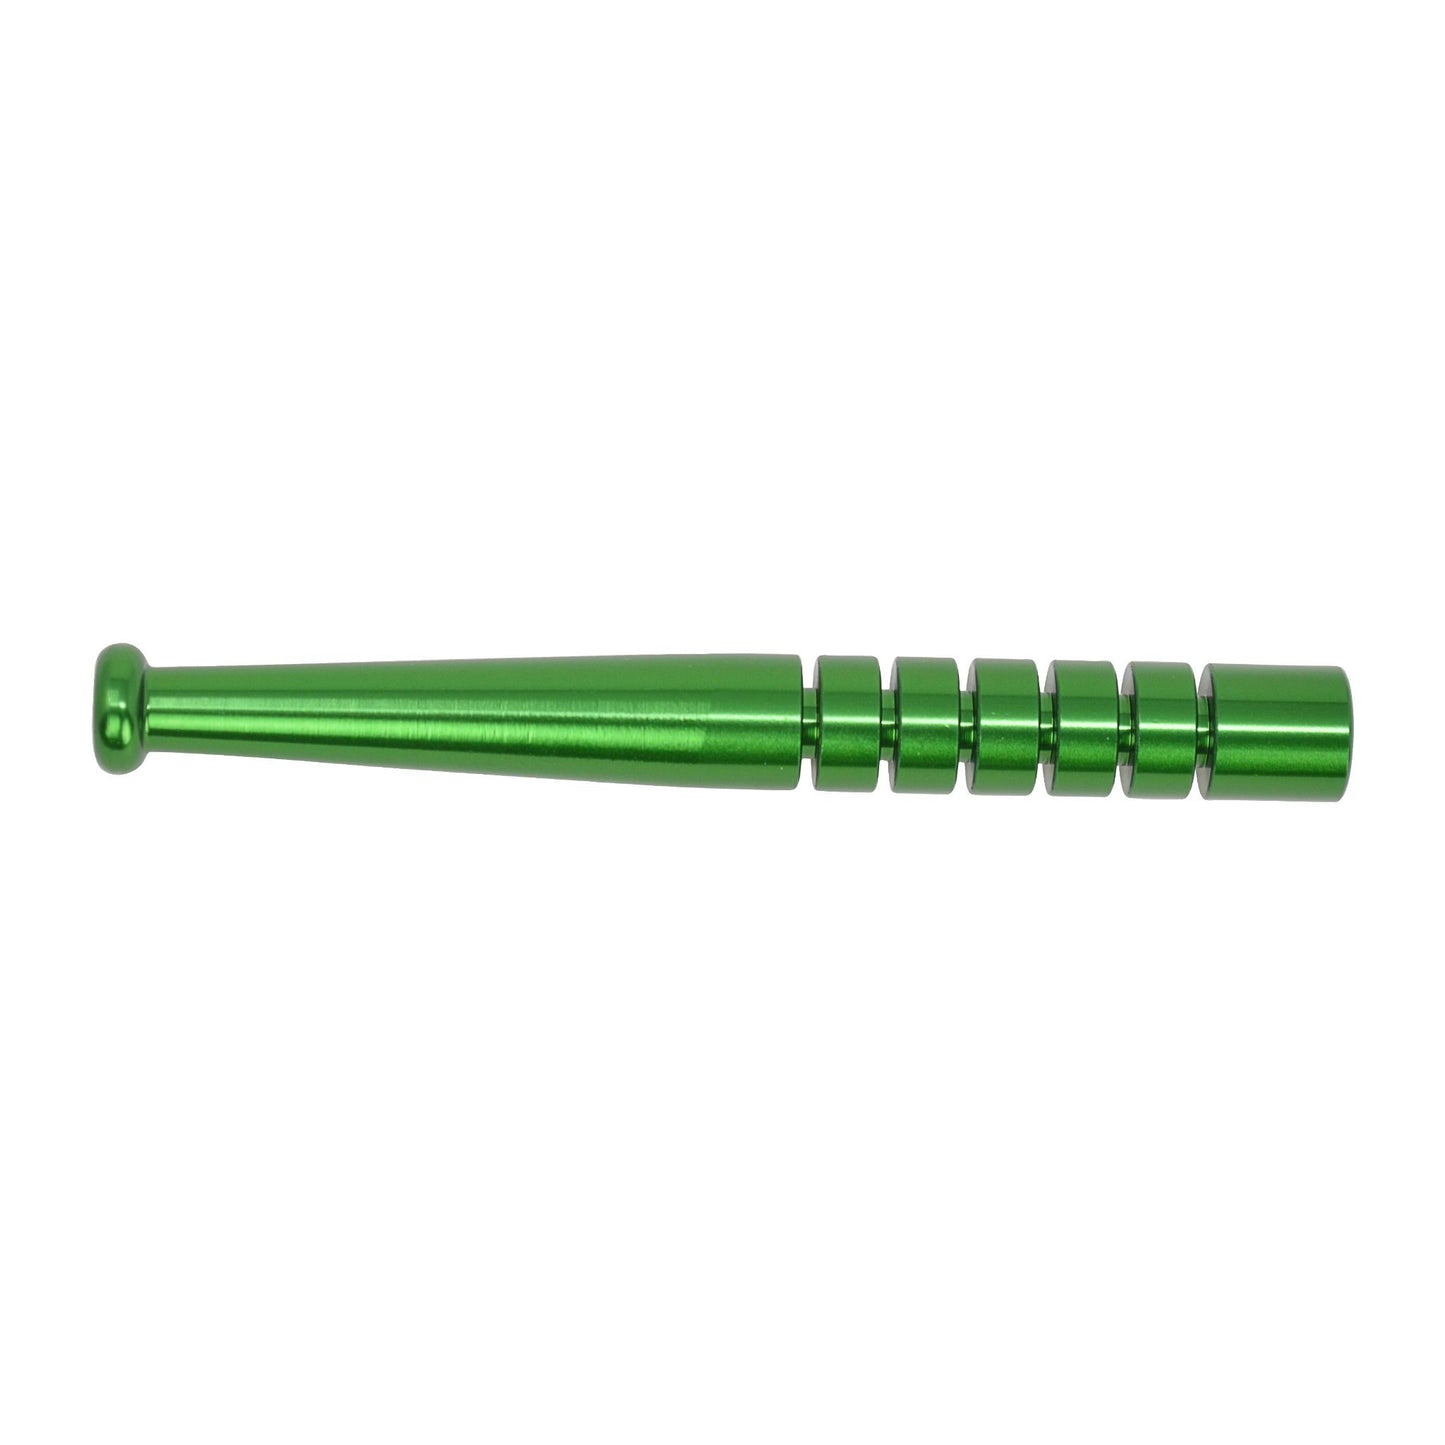 Green metal oney little pipe one hitter smoking device with baseball bat design textured ridges